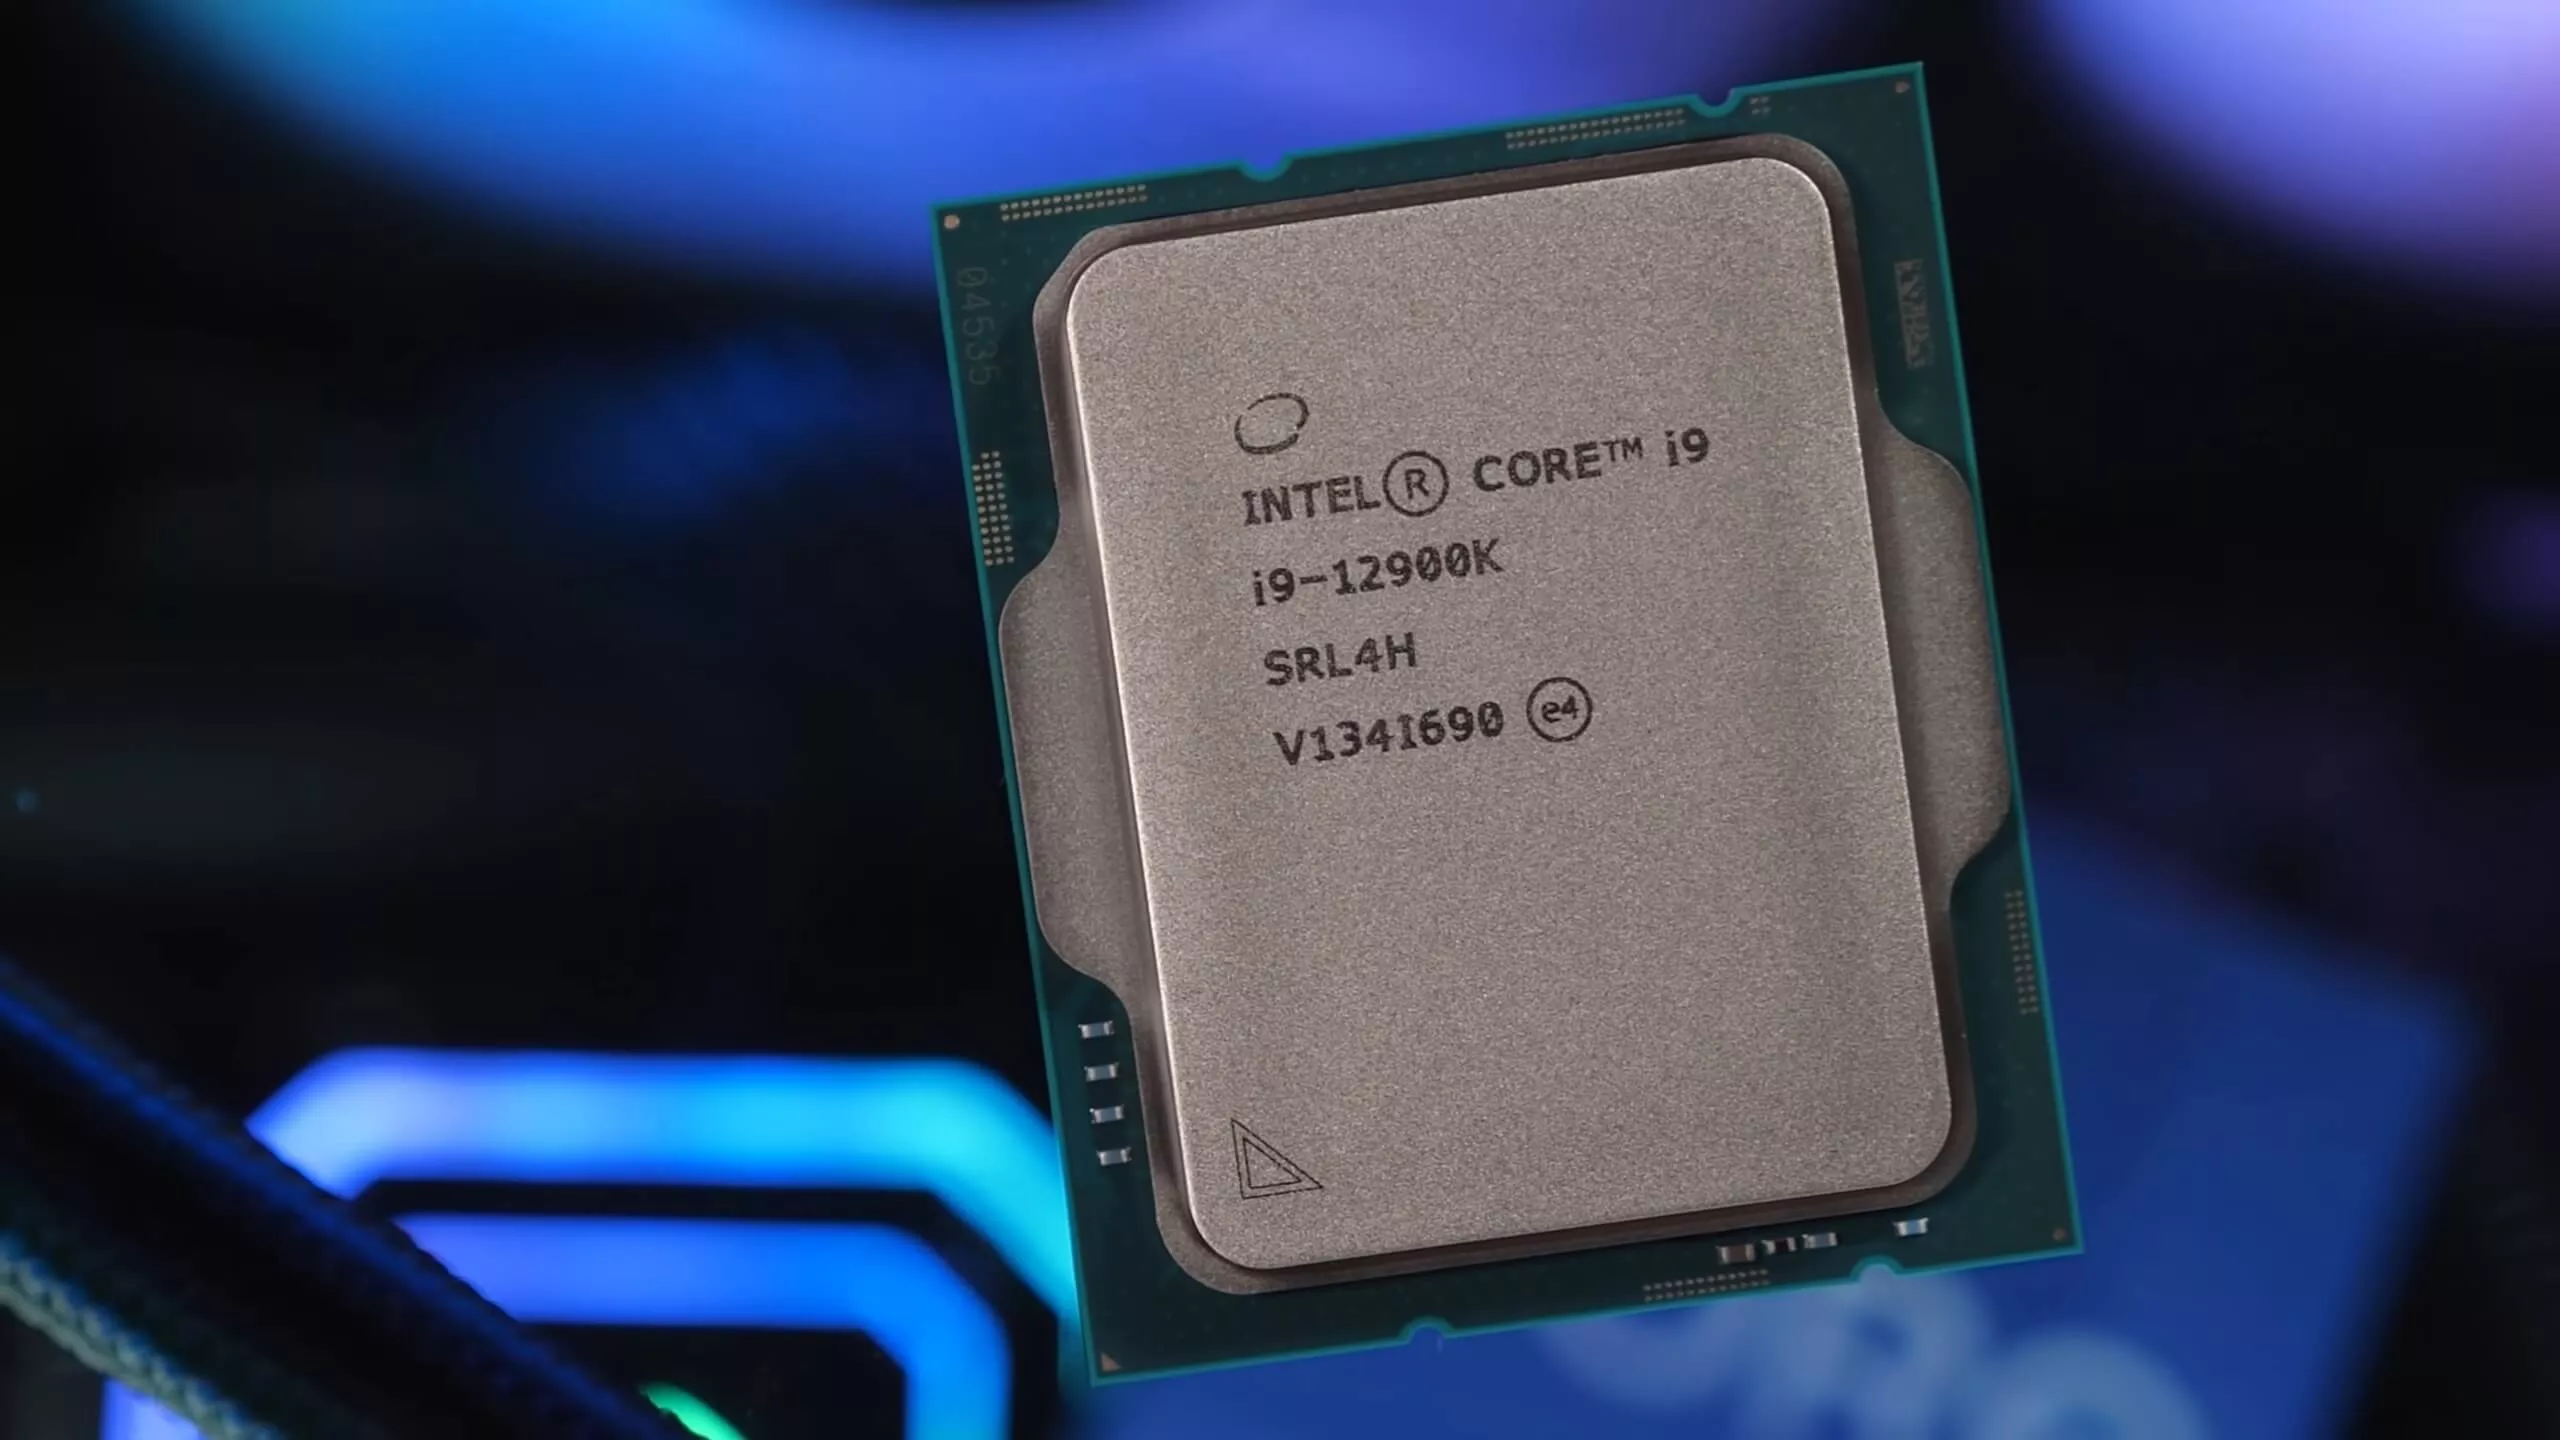 Intel Core i9-12900K/KF CPU prices drop close to $400